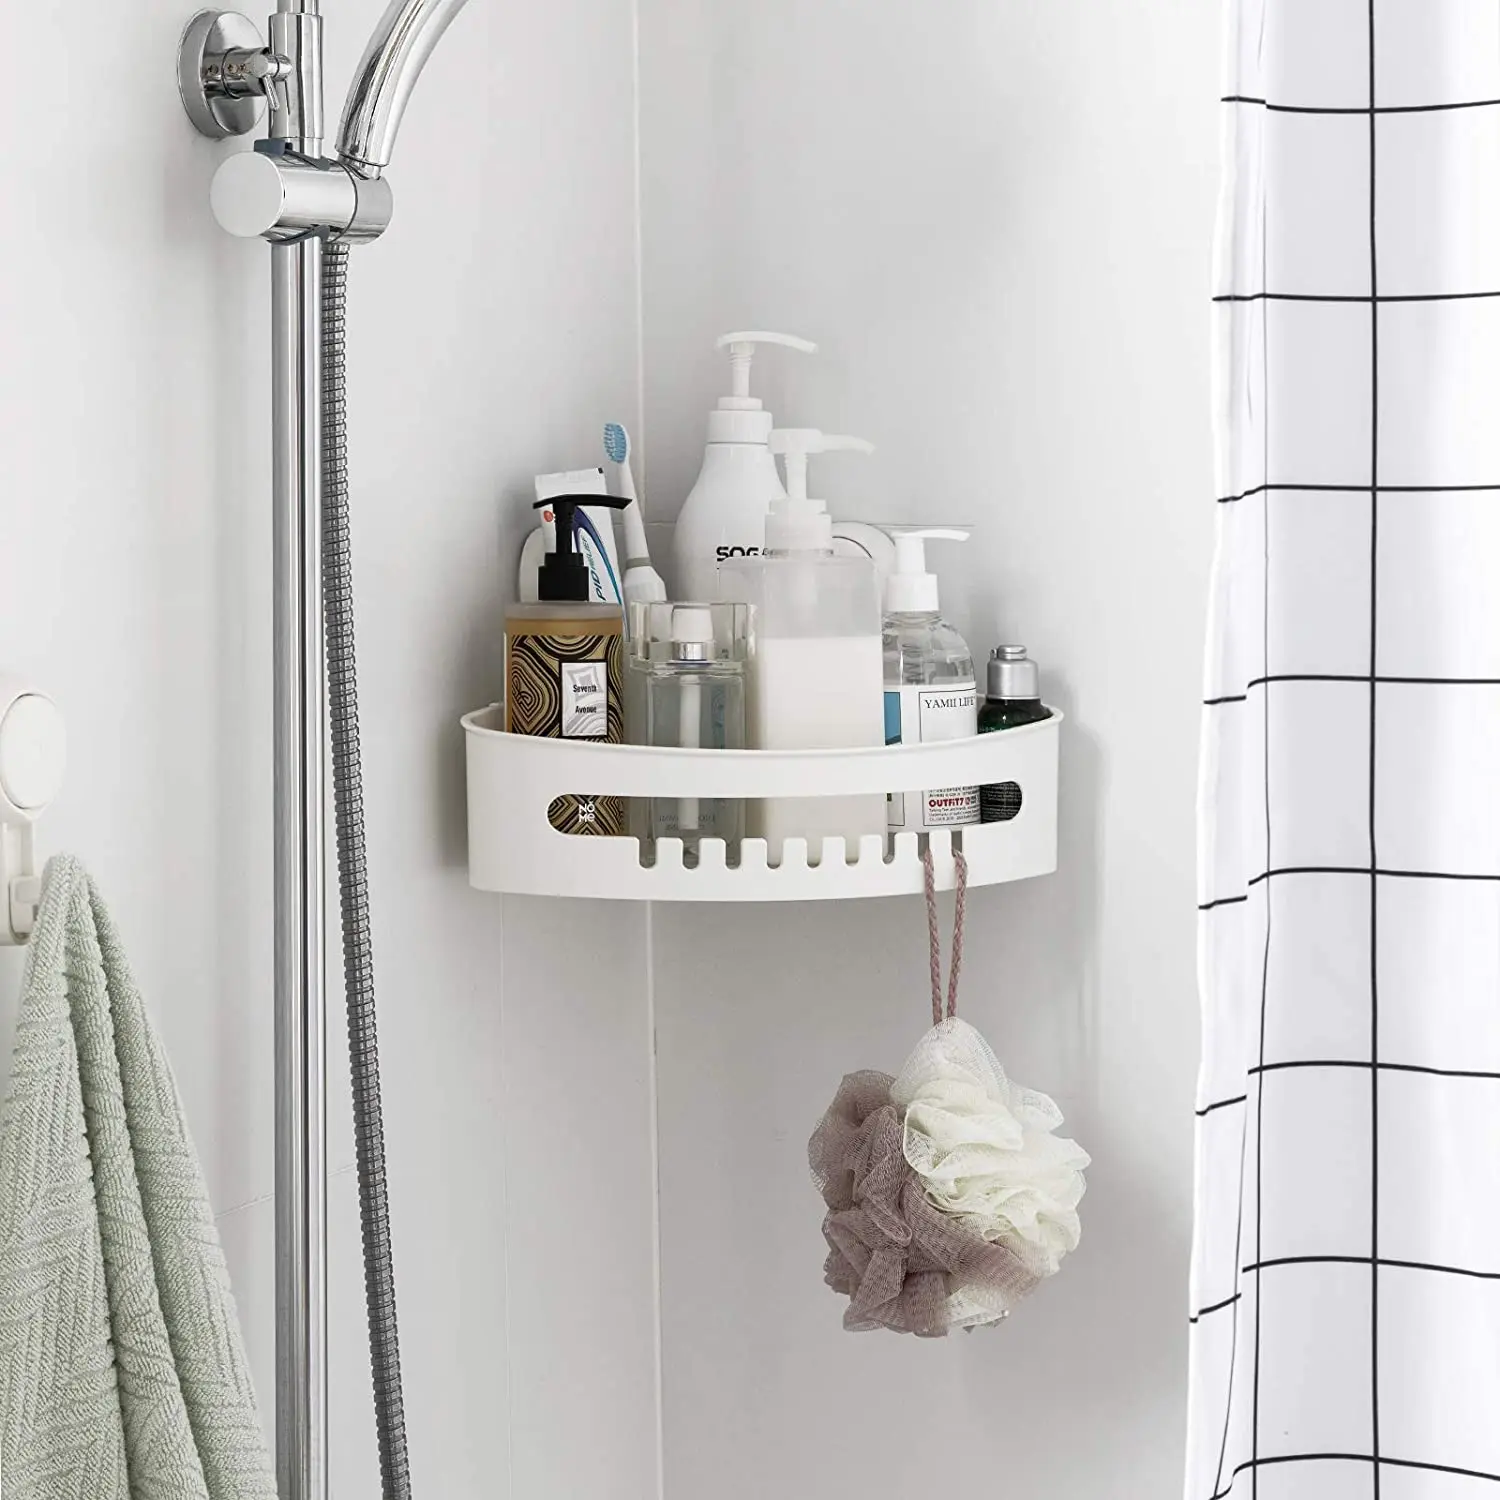 https://ae01.alicdn.com/kf/Sceffbb4ef74c405bb2c1eba8c8dbf7d0v/ABS-Bathroom-Shelf-Shampoo-Holder-Shower-Caddy-Shelves-Storage-Corner-Basket-Suction-Cup-Cosmetic-Rack-Home.jpg